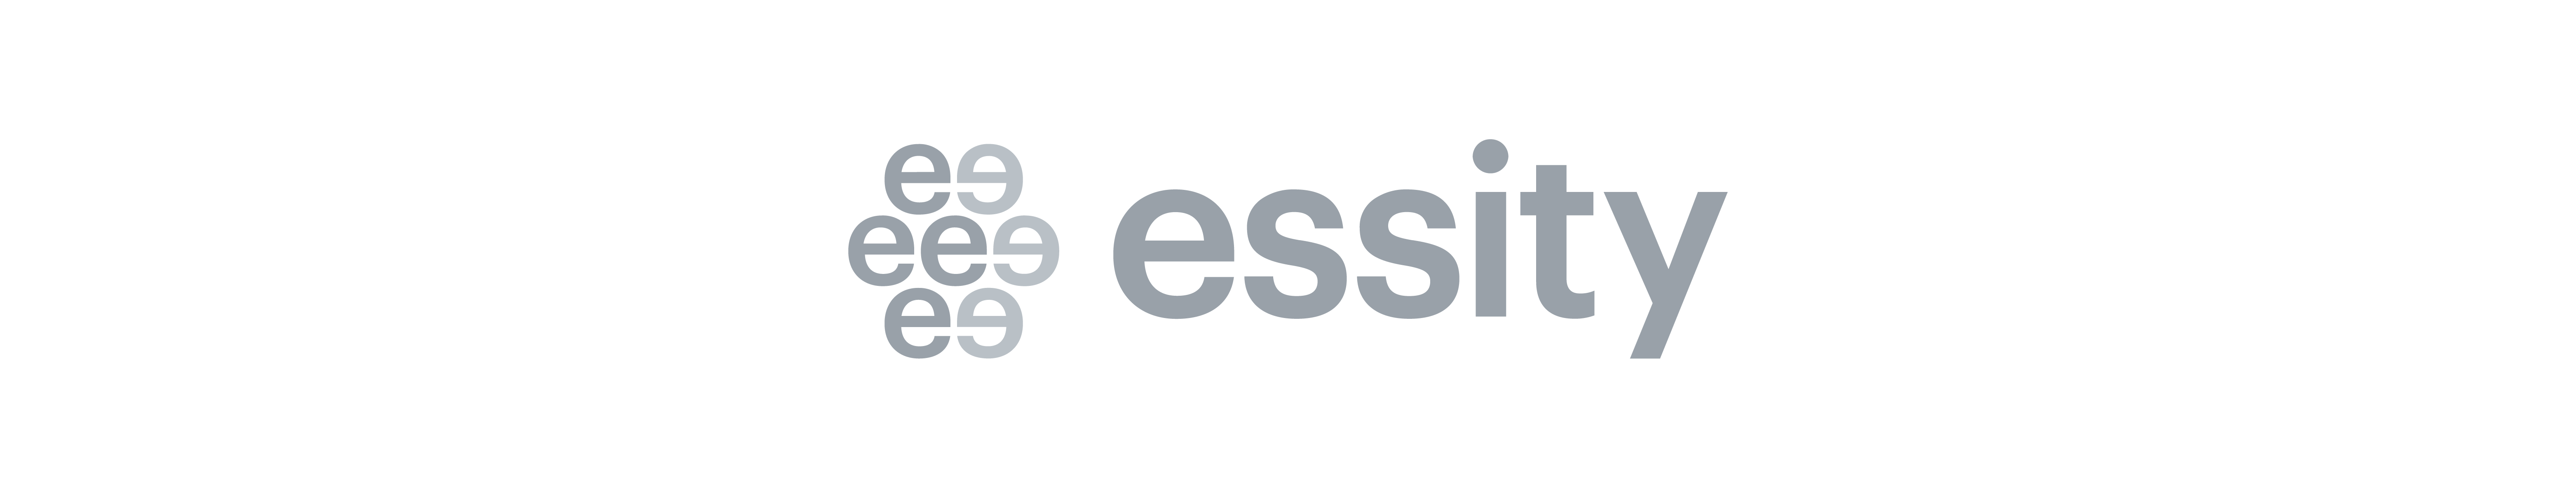 200630 essity Cases Logos